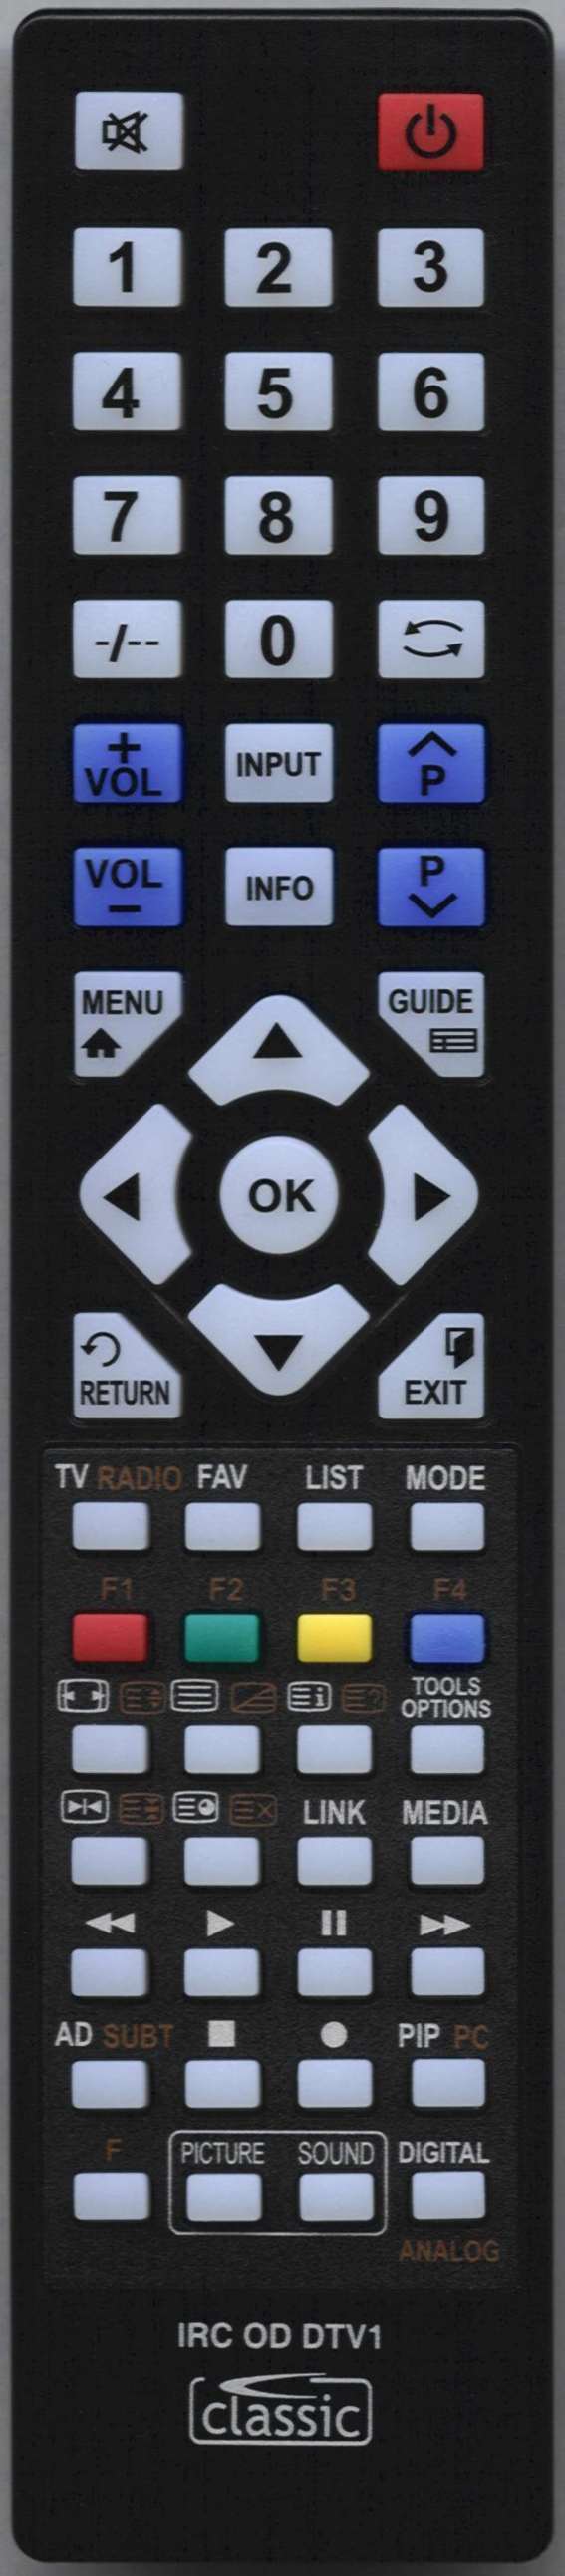 UMC E19/13B-GB-TCD-UK Remote Control Alternative 